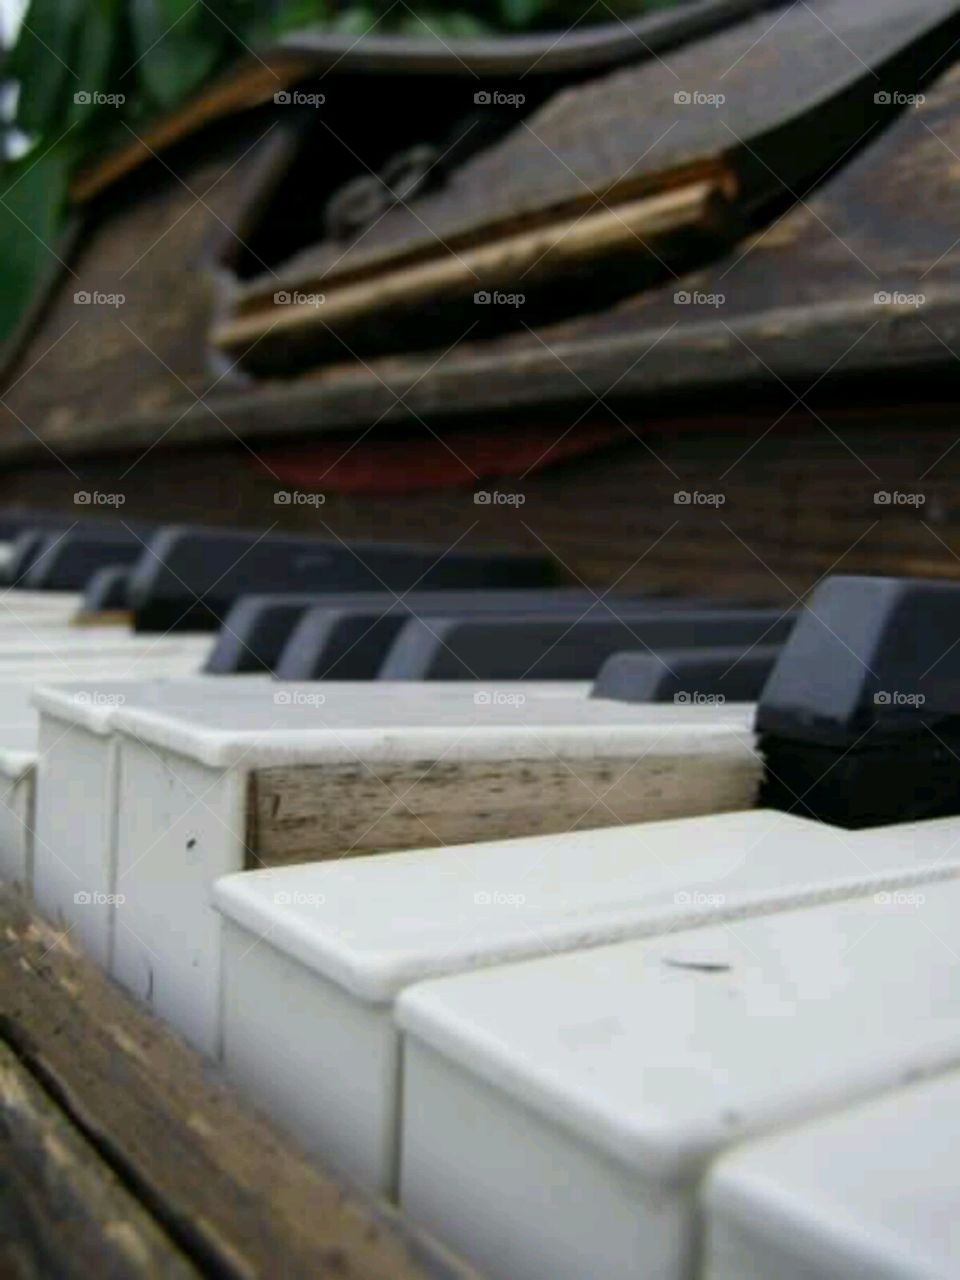 piano man . abandoned piano left outdoors